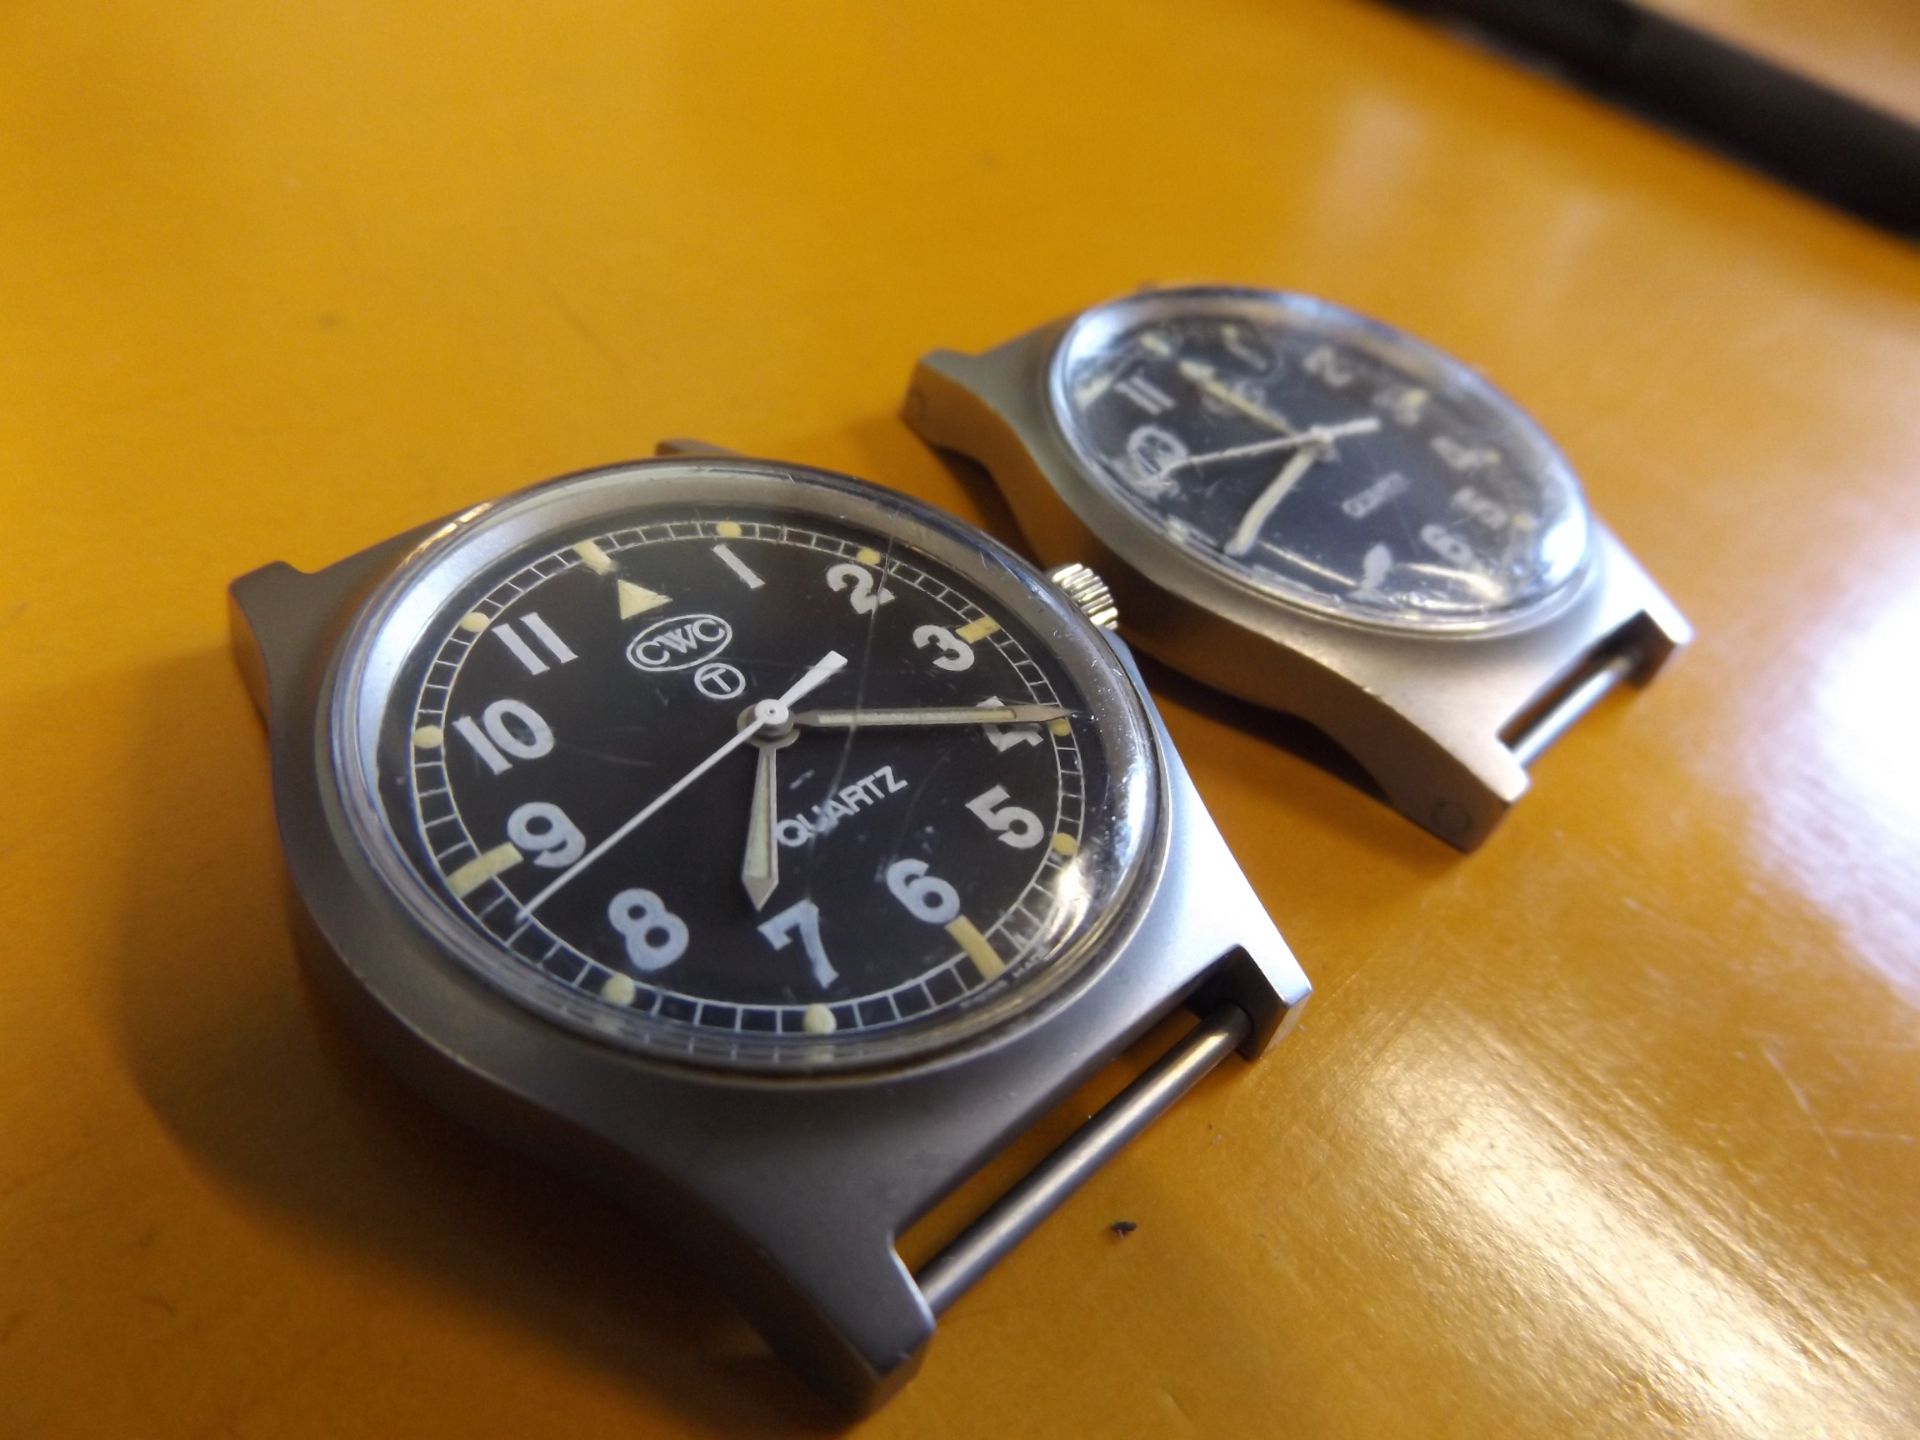 2 x Genuine British Army,CWC quartz wrist watches - Image 3 of 7